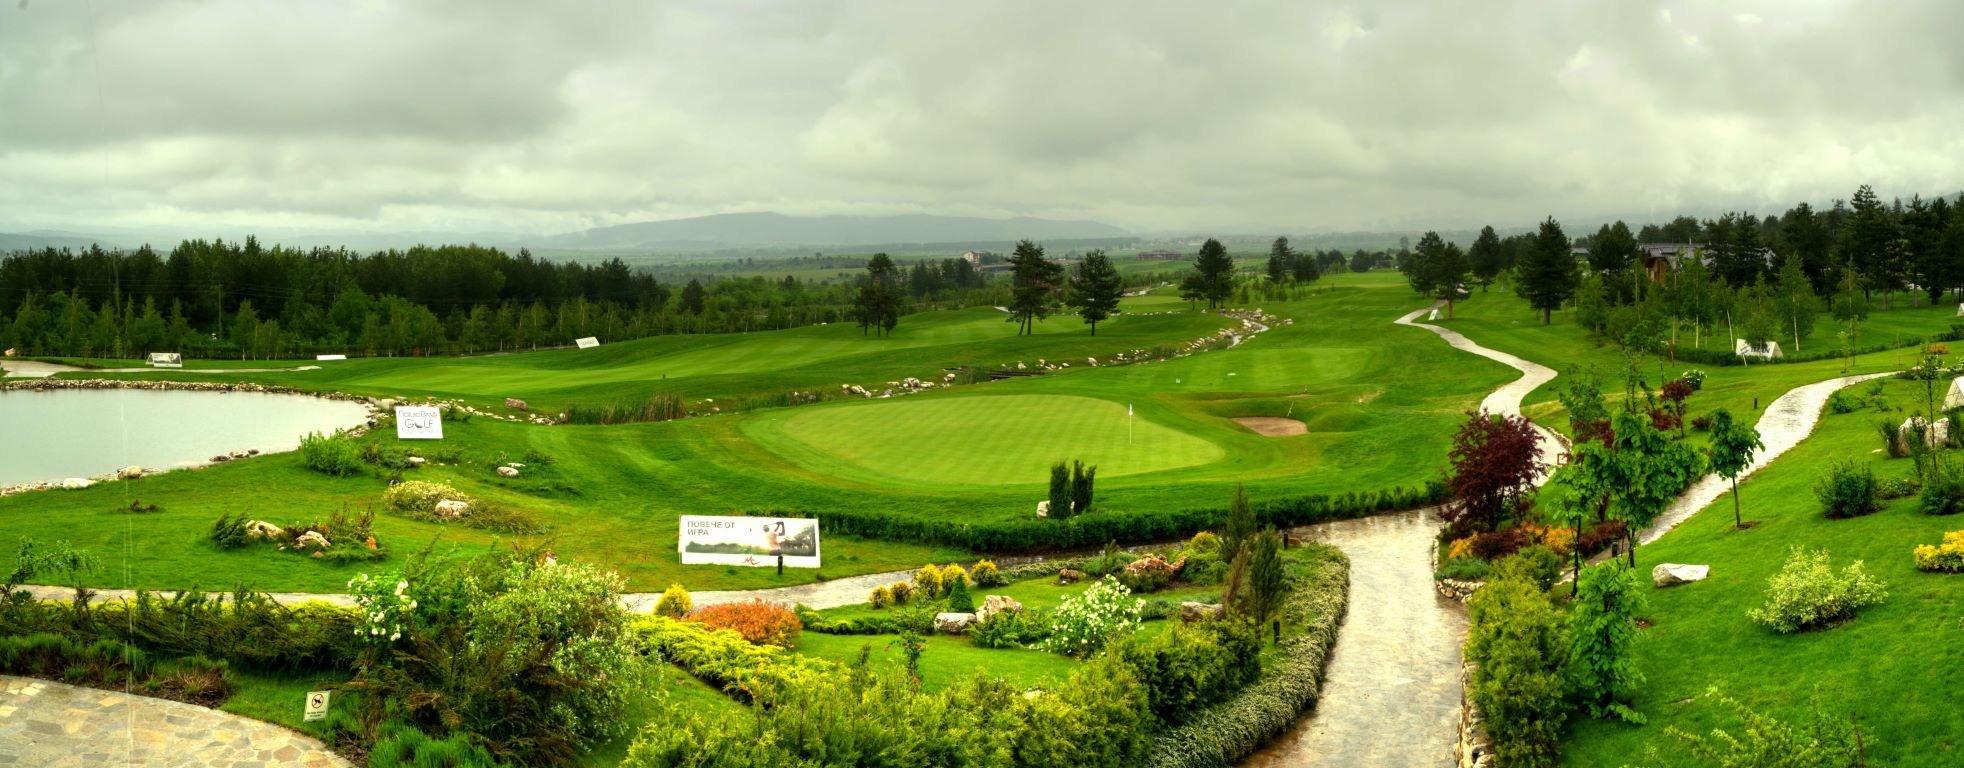 Pirin Golf Holiday Apartments-Golf tereni.jpg